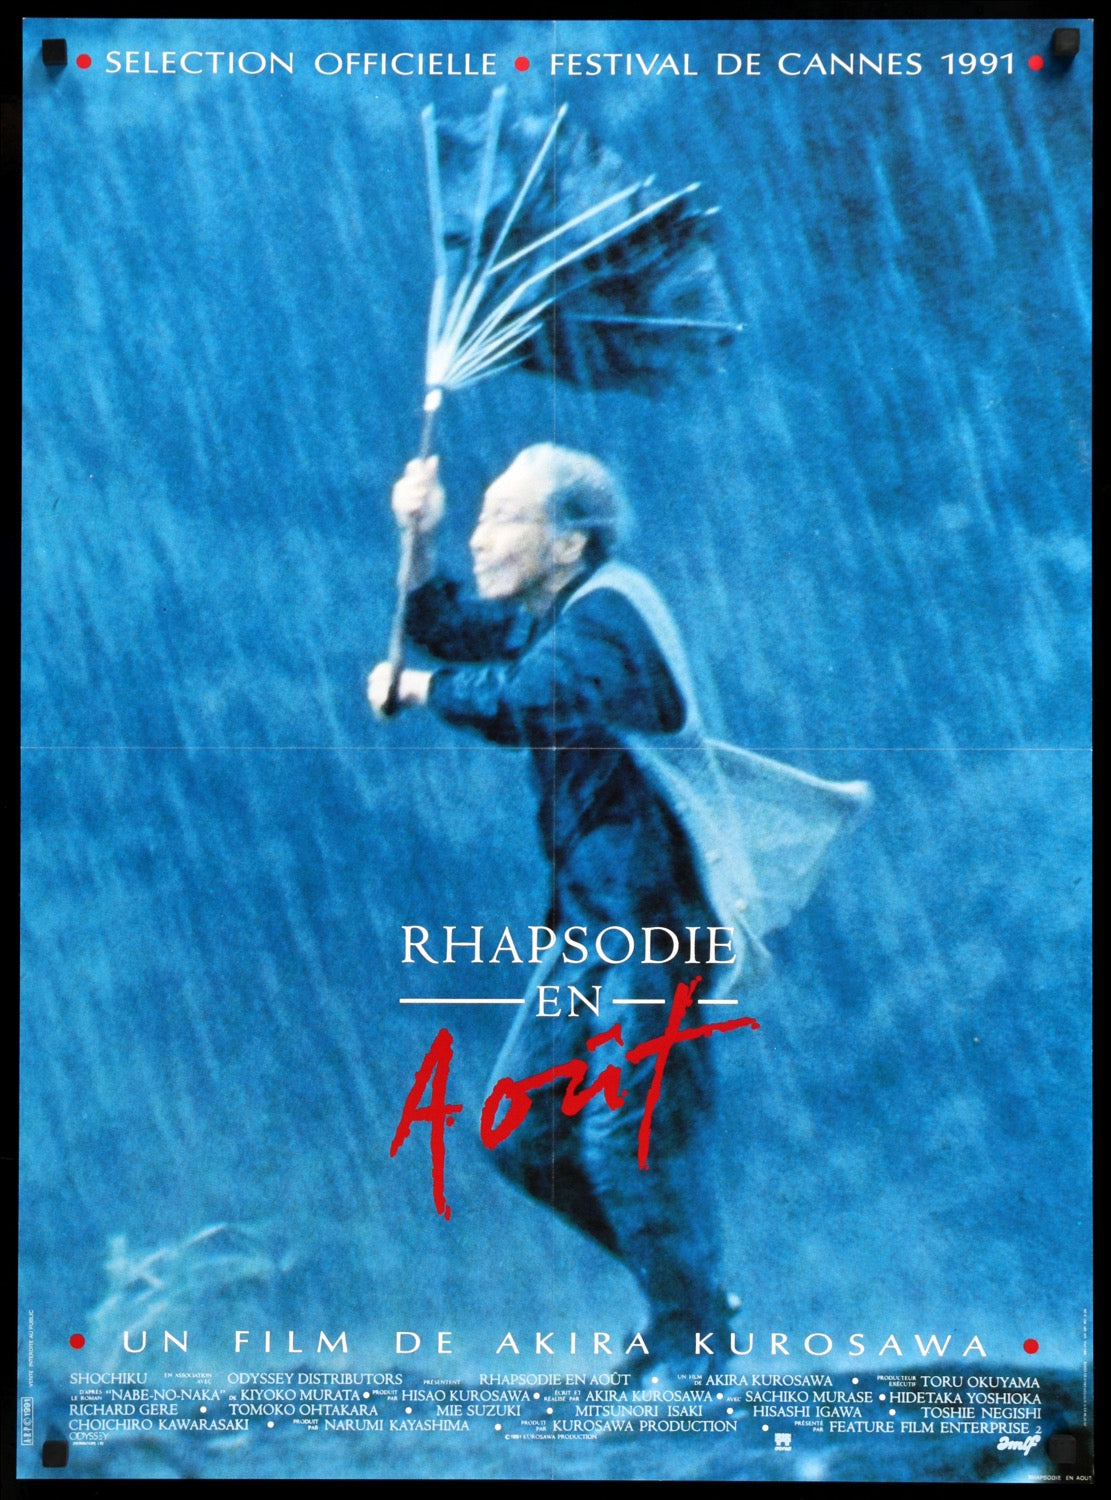 Rhapsody in August (1990) original movie poster for sale at Original Film Art